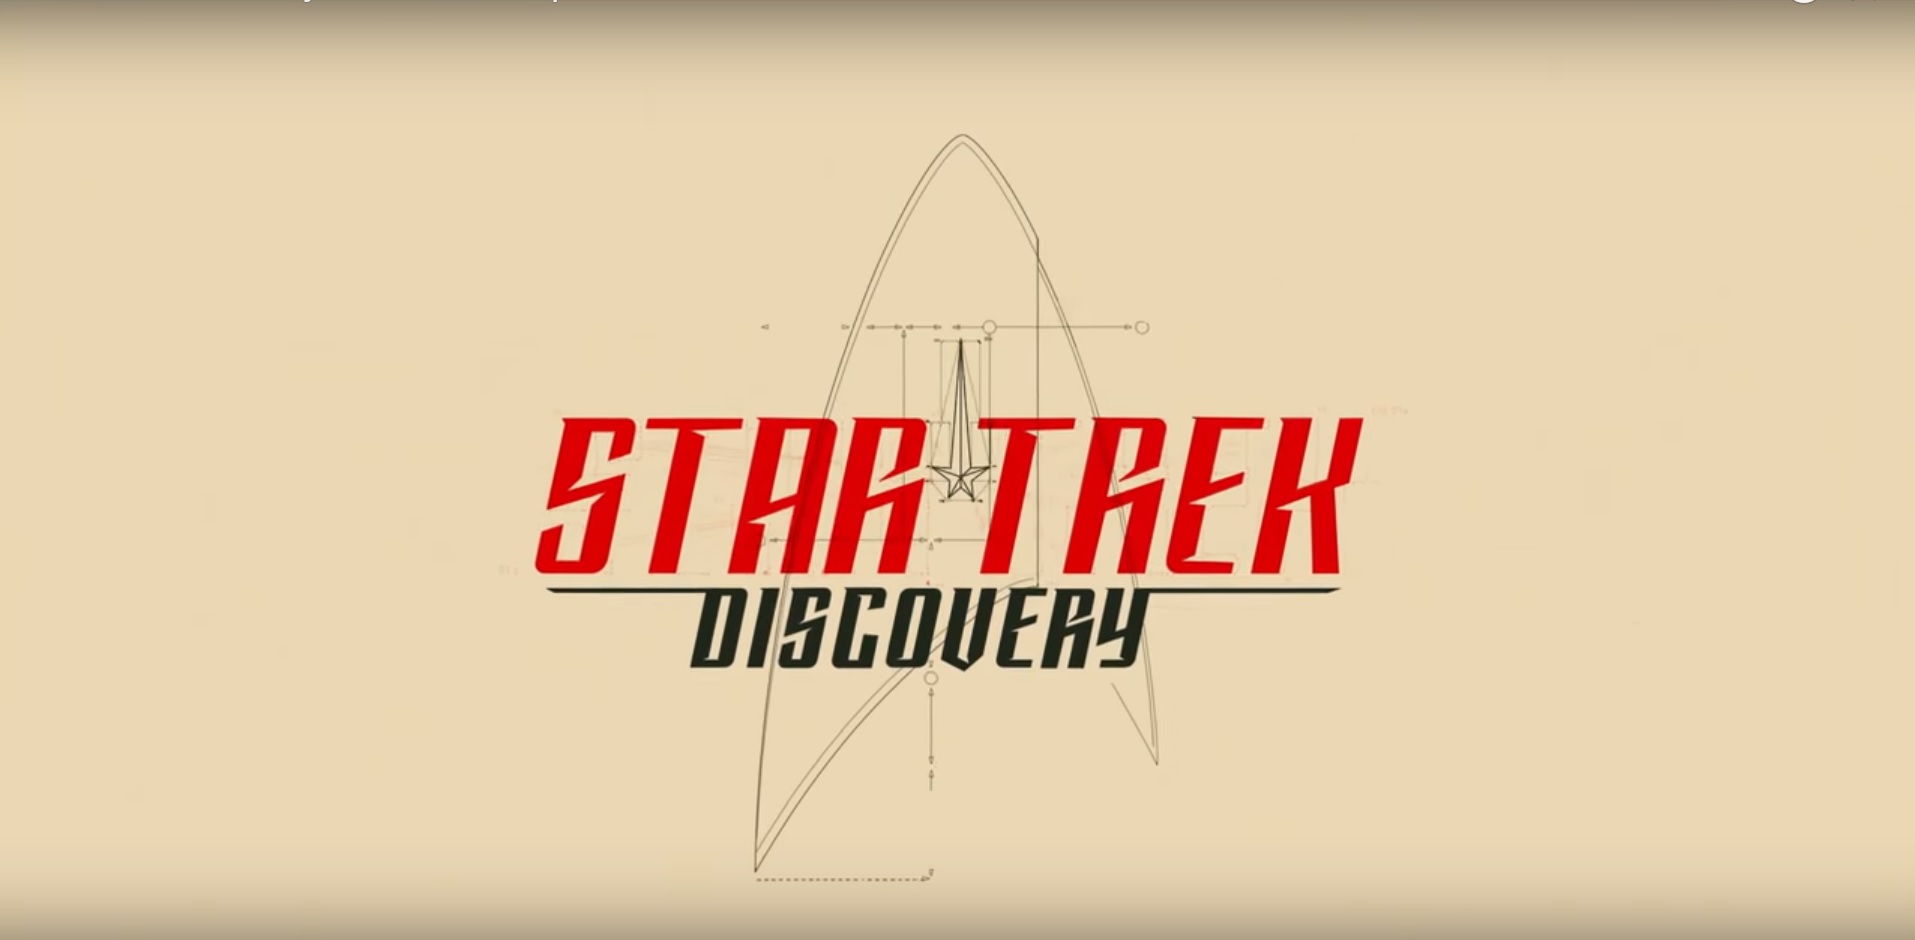 Bonus Scene And Season Two Reveals From The Star Trek Discovery Wondercon Panel Spoilers For Season 1